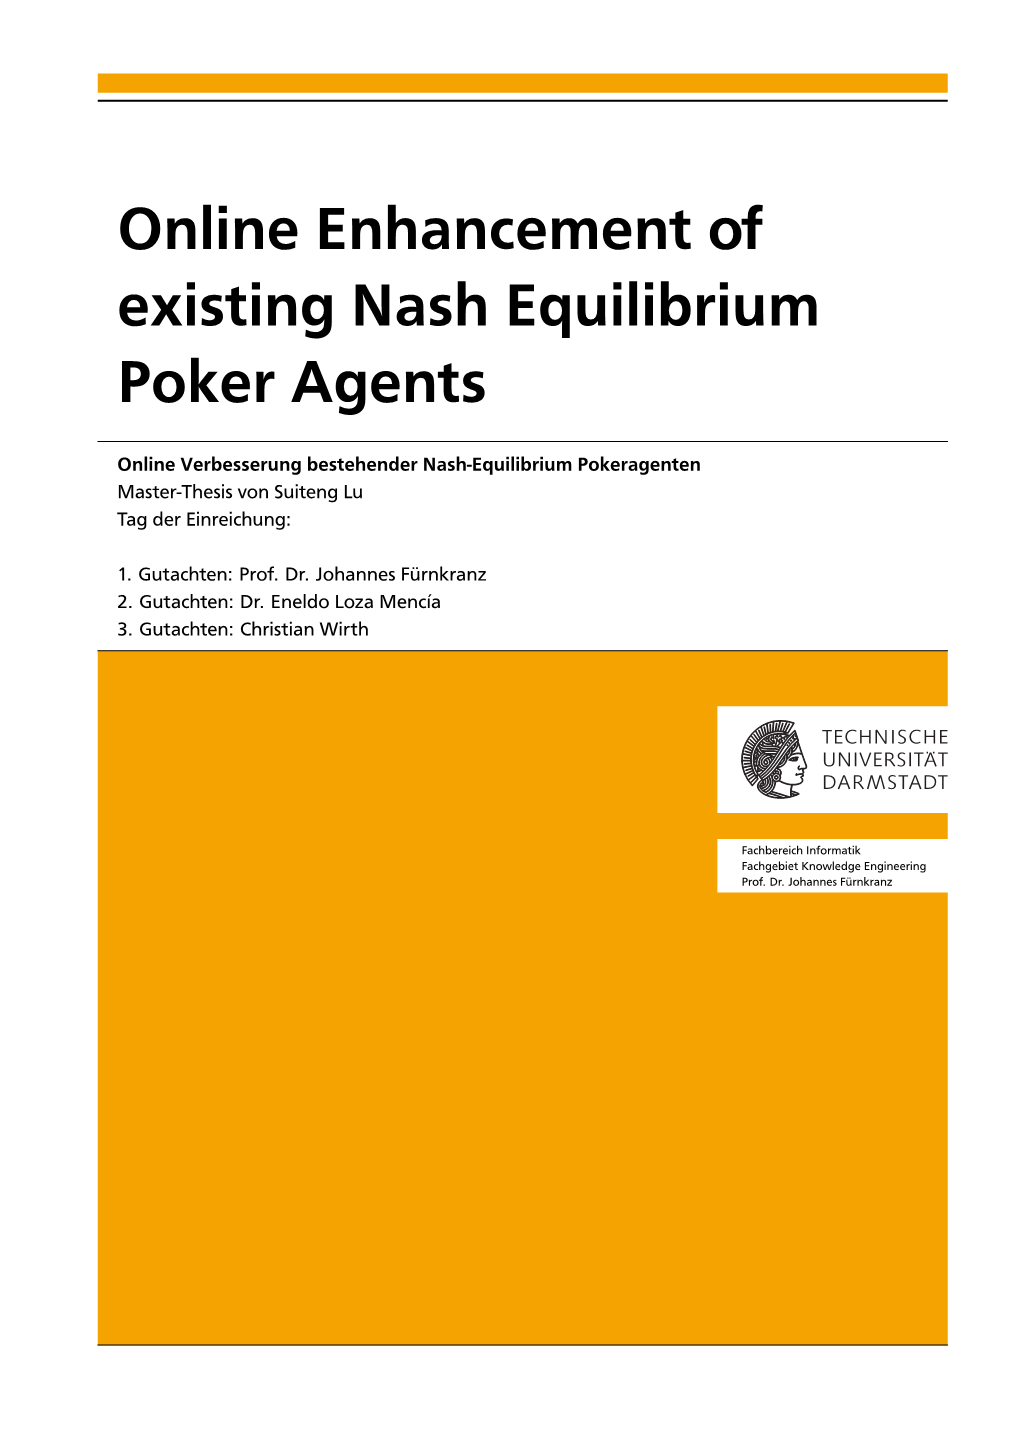 Online Enhancement of Existing Nash Equilibrium Poker Agents